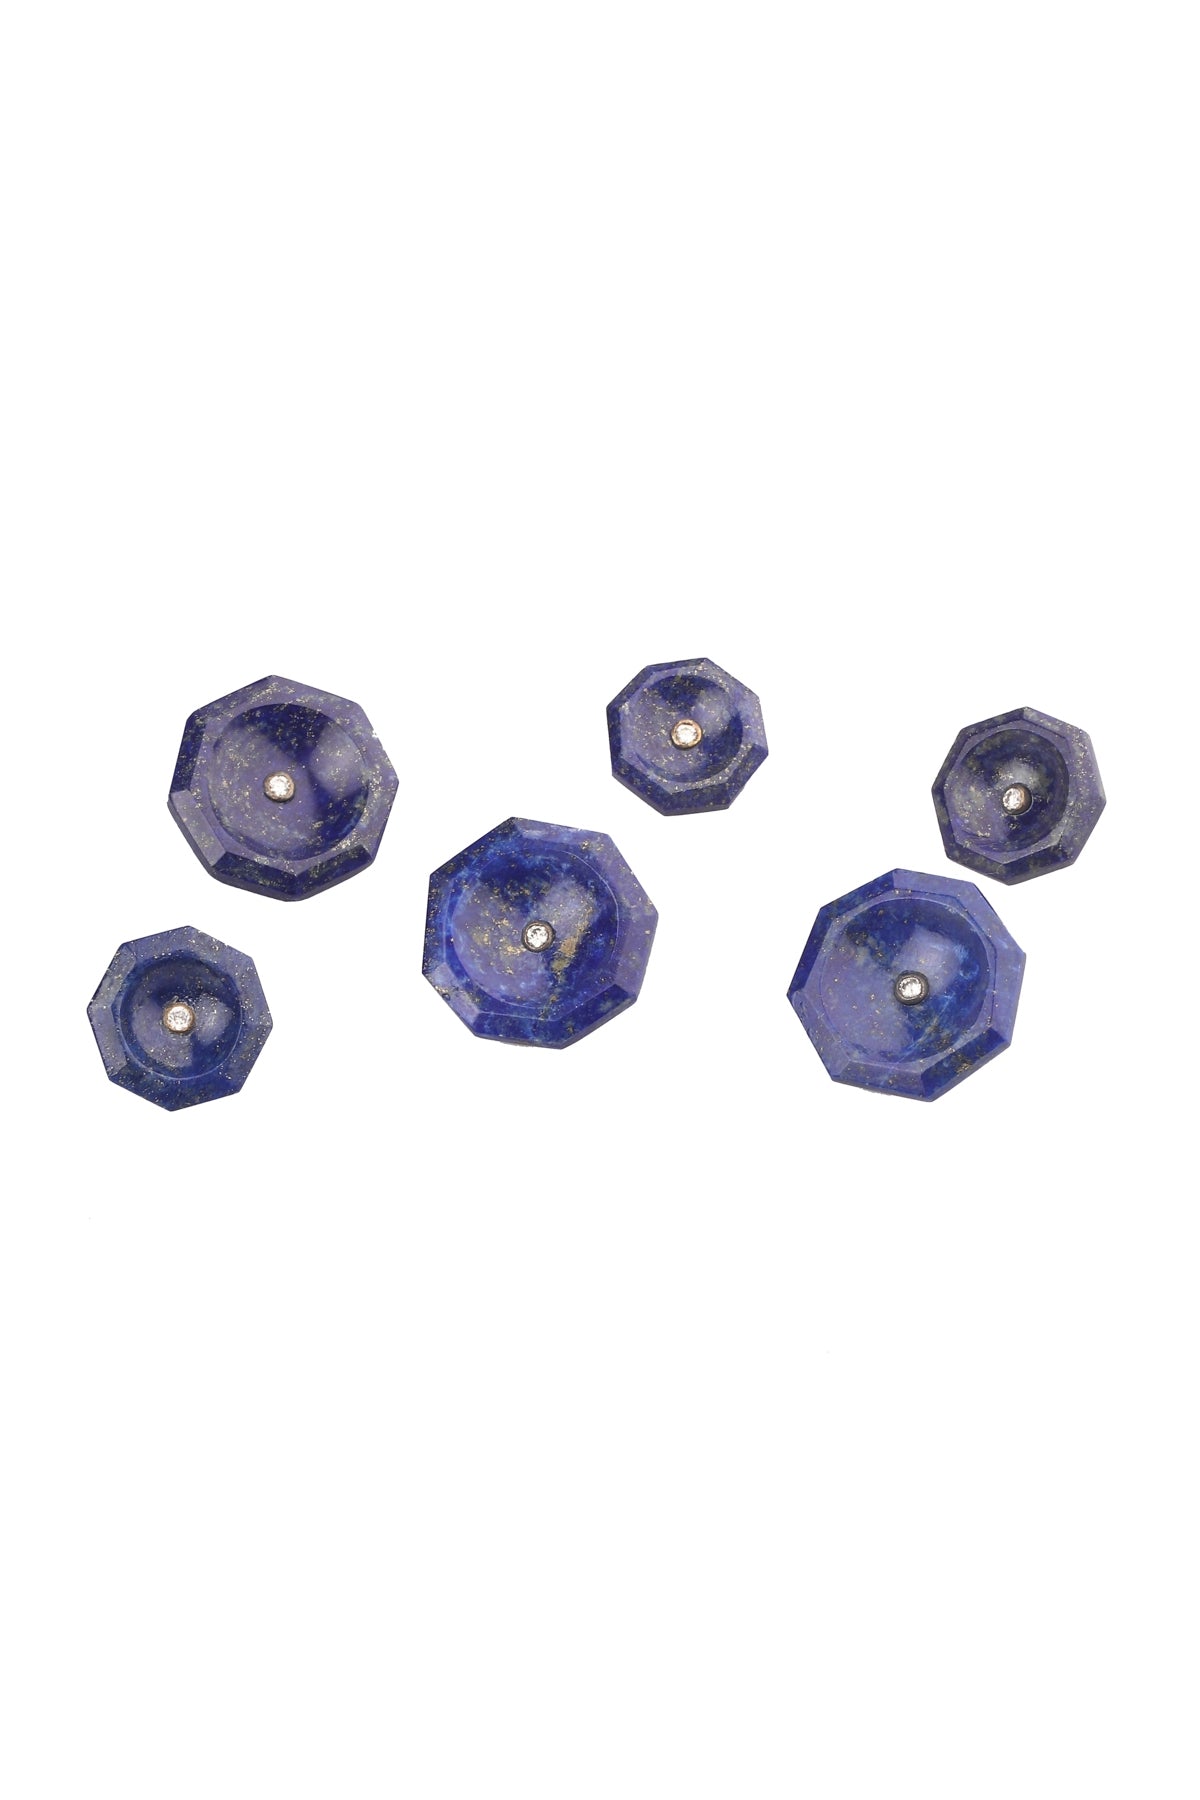 Hexagon Lapis Lazuli Buttons